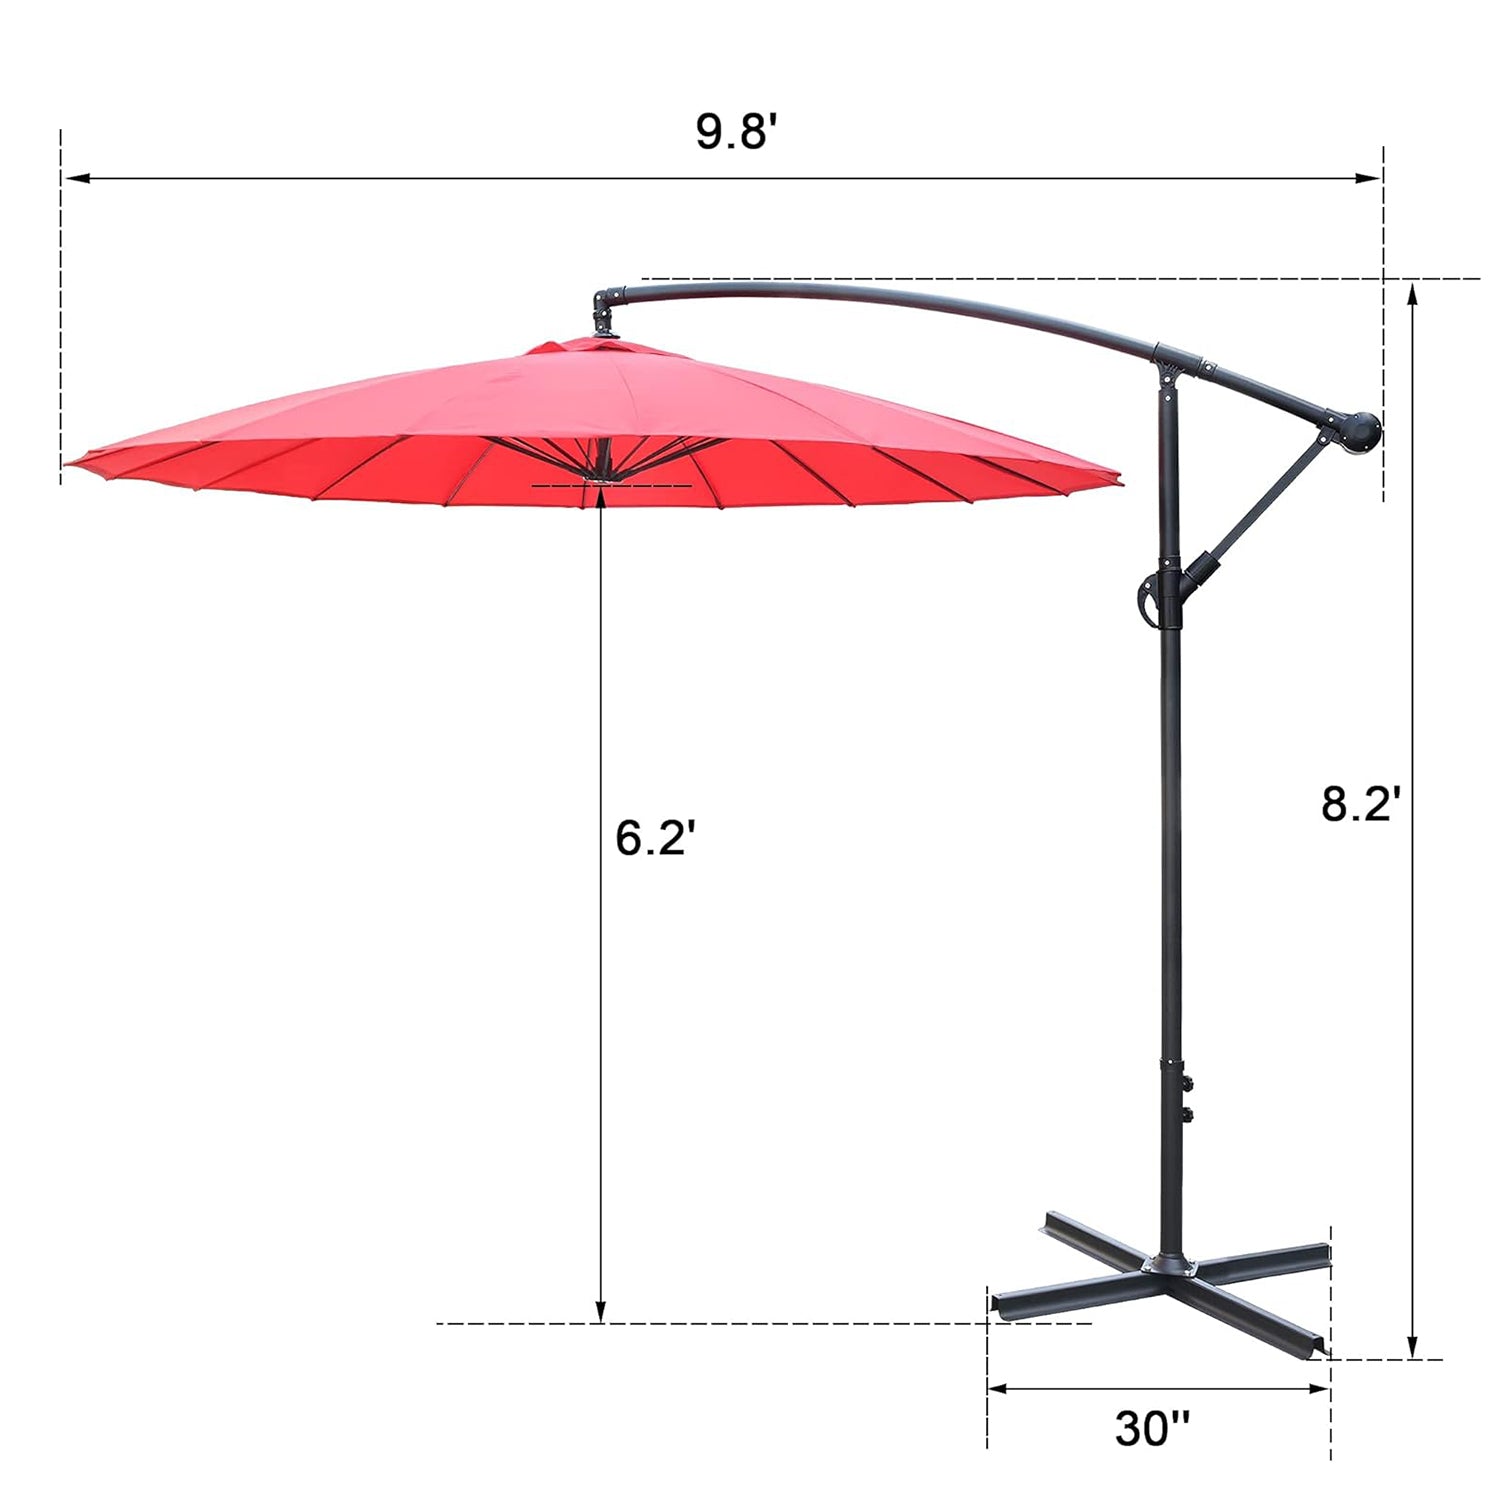 Offset Hanging Market Patio Umbrella w/Easy Tilt Adjustment for Backyard, Poolside, Lawn and Garden, Red